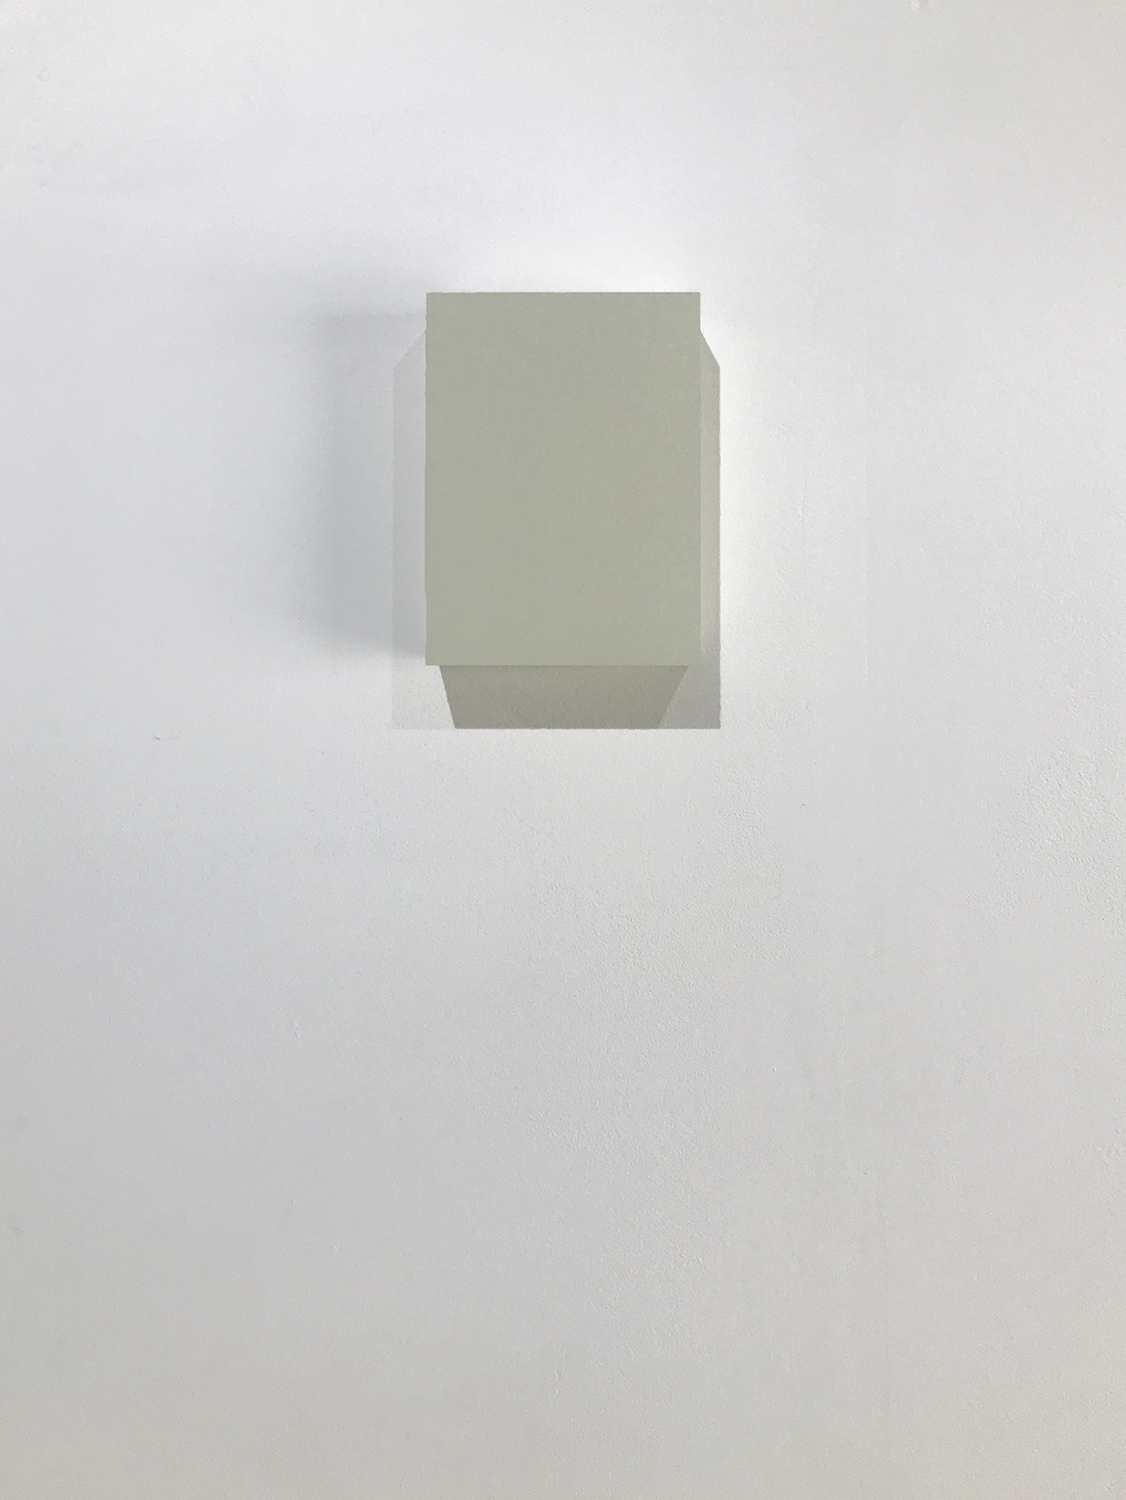 越野潤｜JUN KOSHINO<br>WORK16-9 (beige), silkscreen paint on perspex, 150 x 100 x 50 mm, 2016